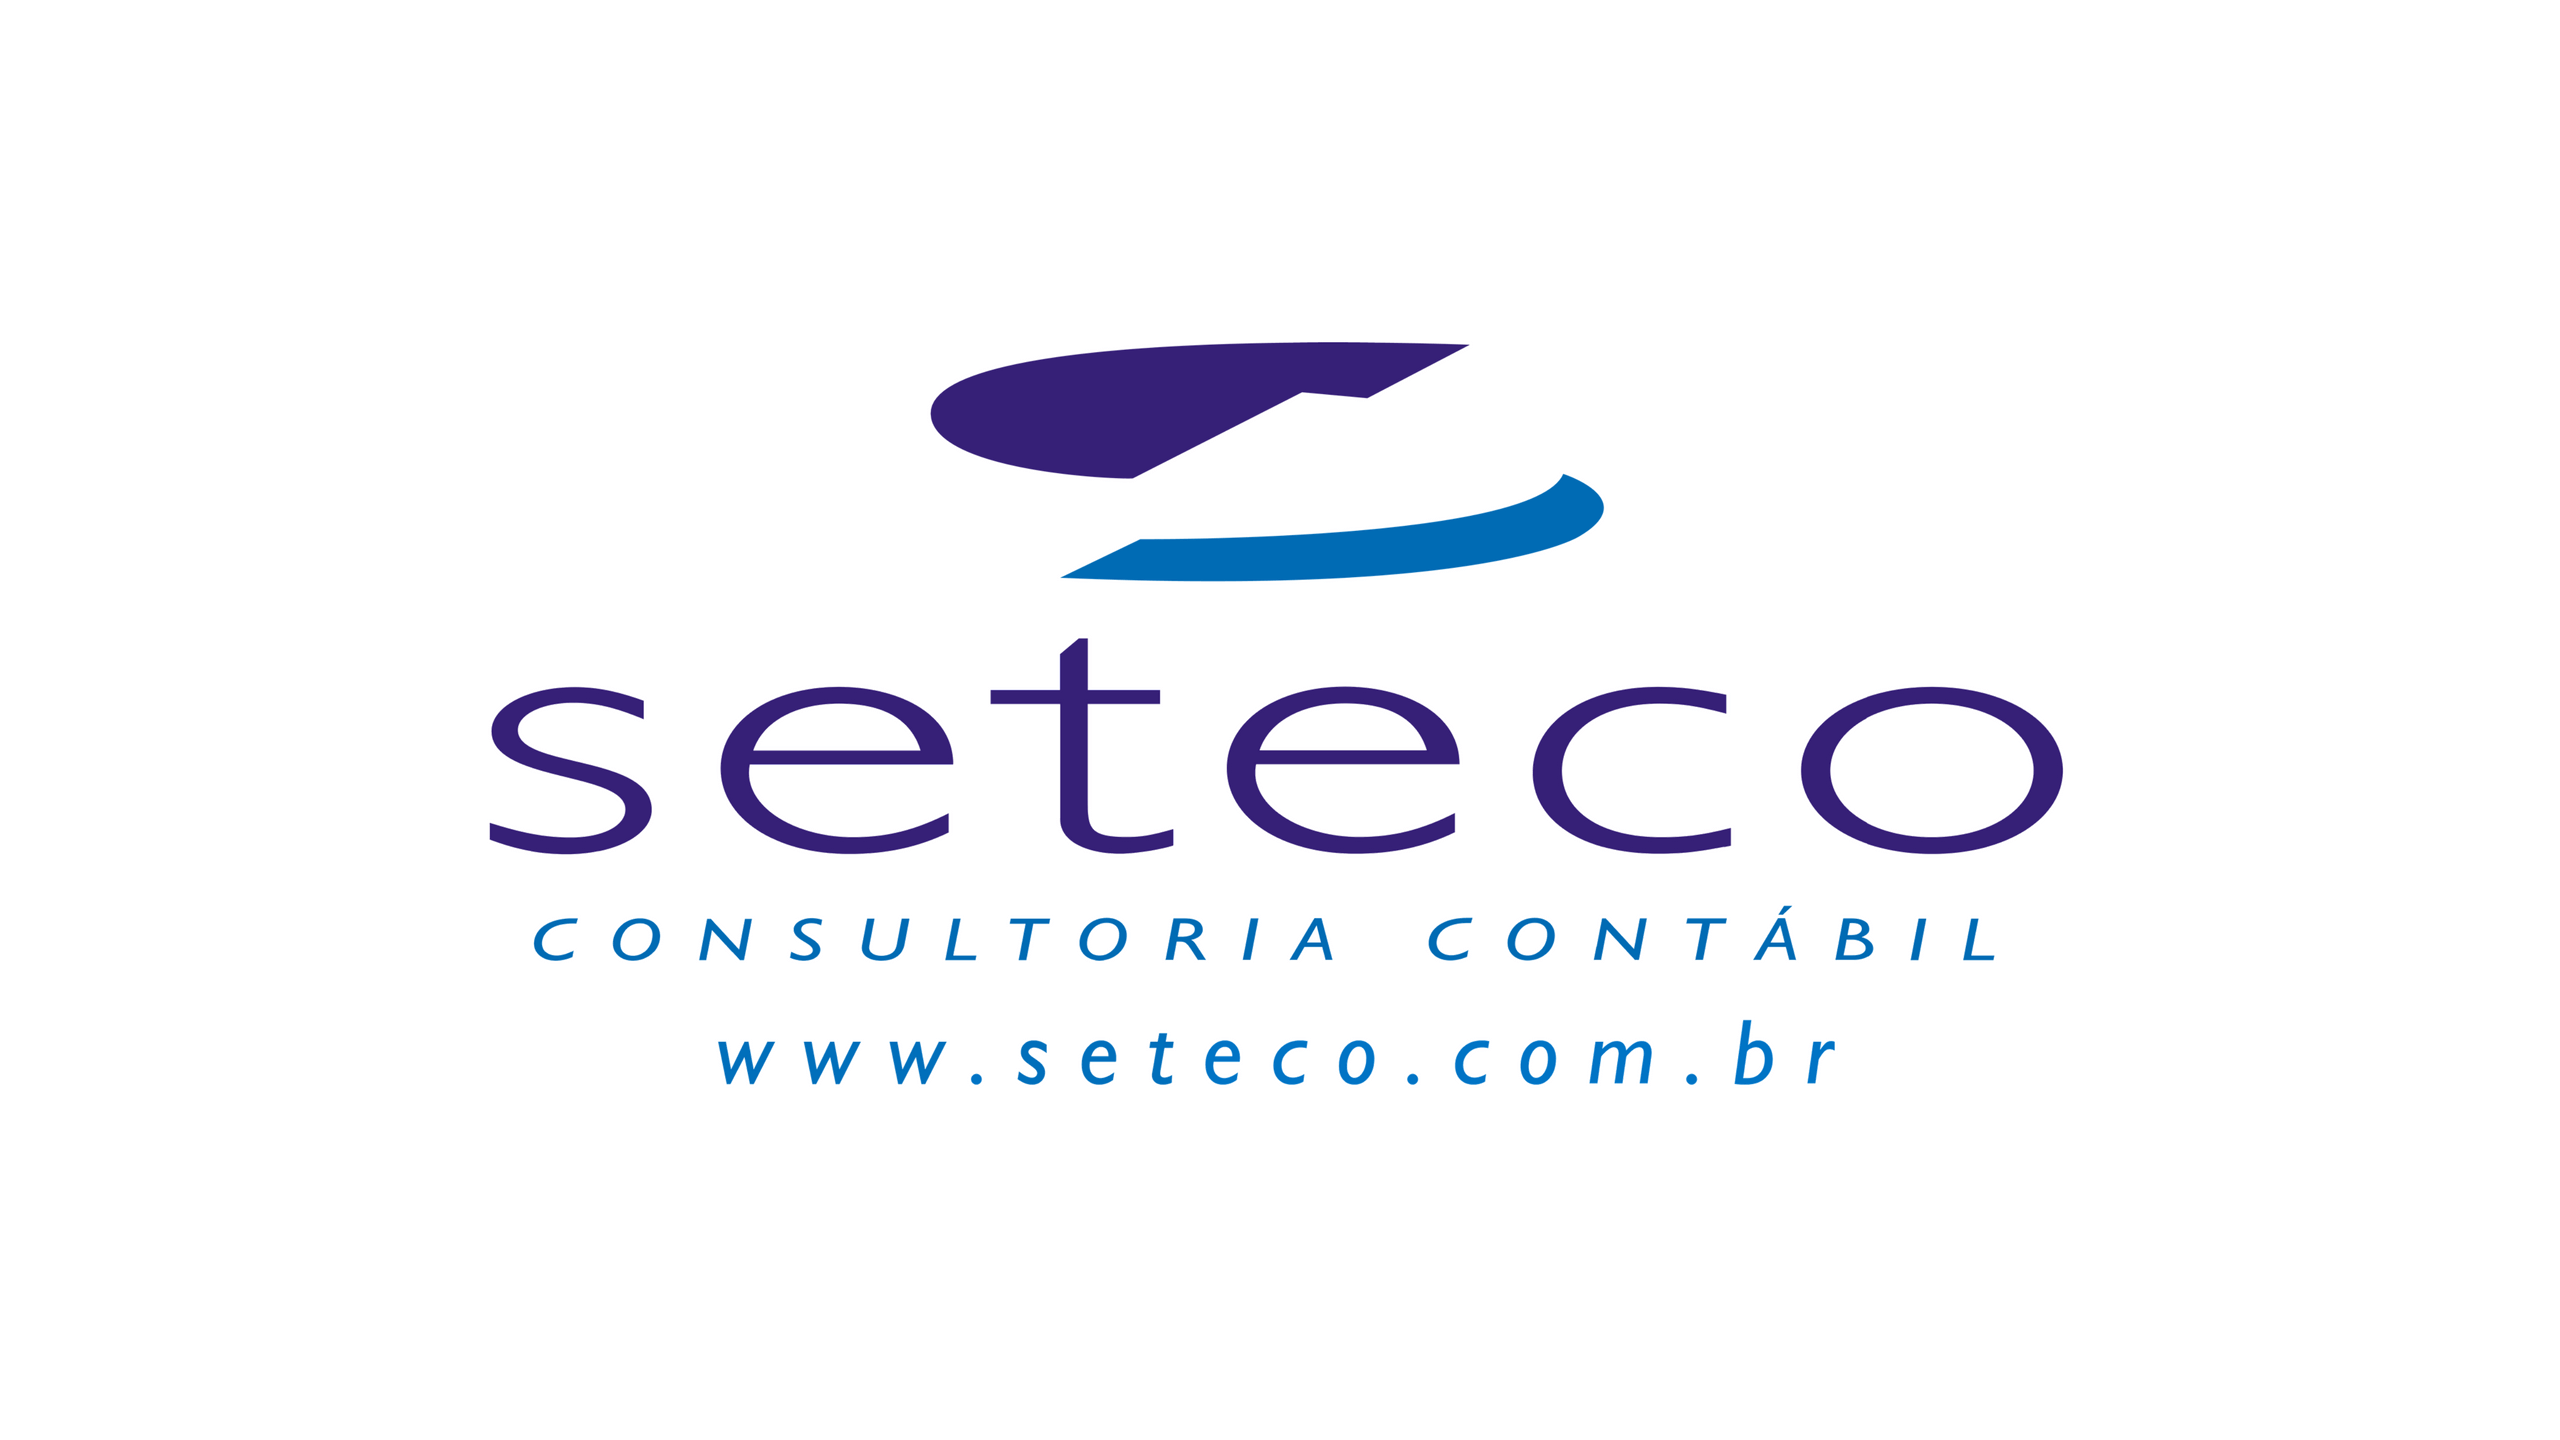 Logotipo Seteco - Consultoria Contábil - www.seteco.com.br